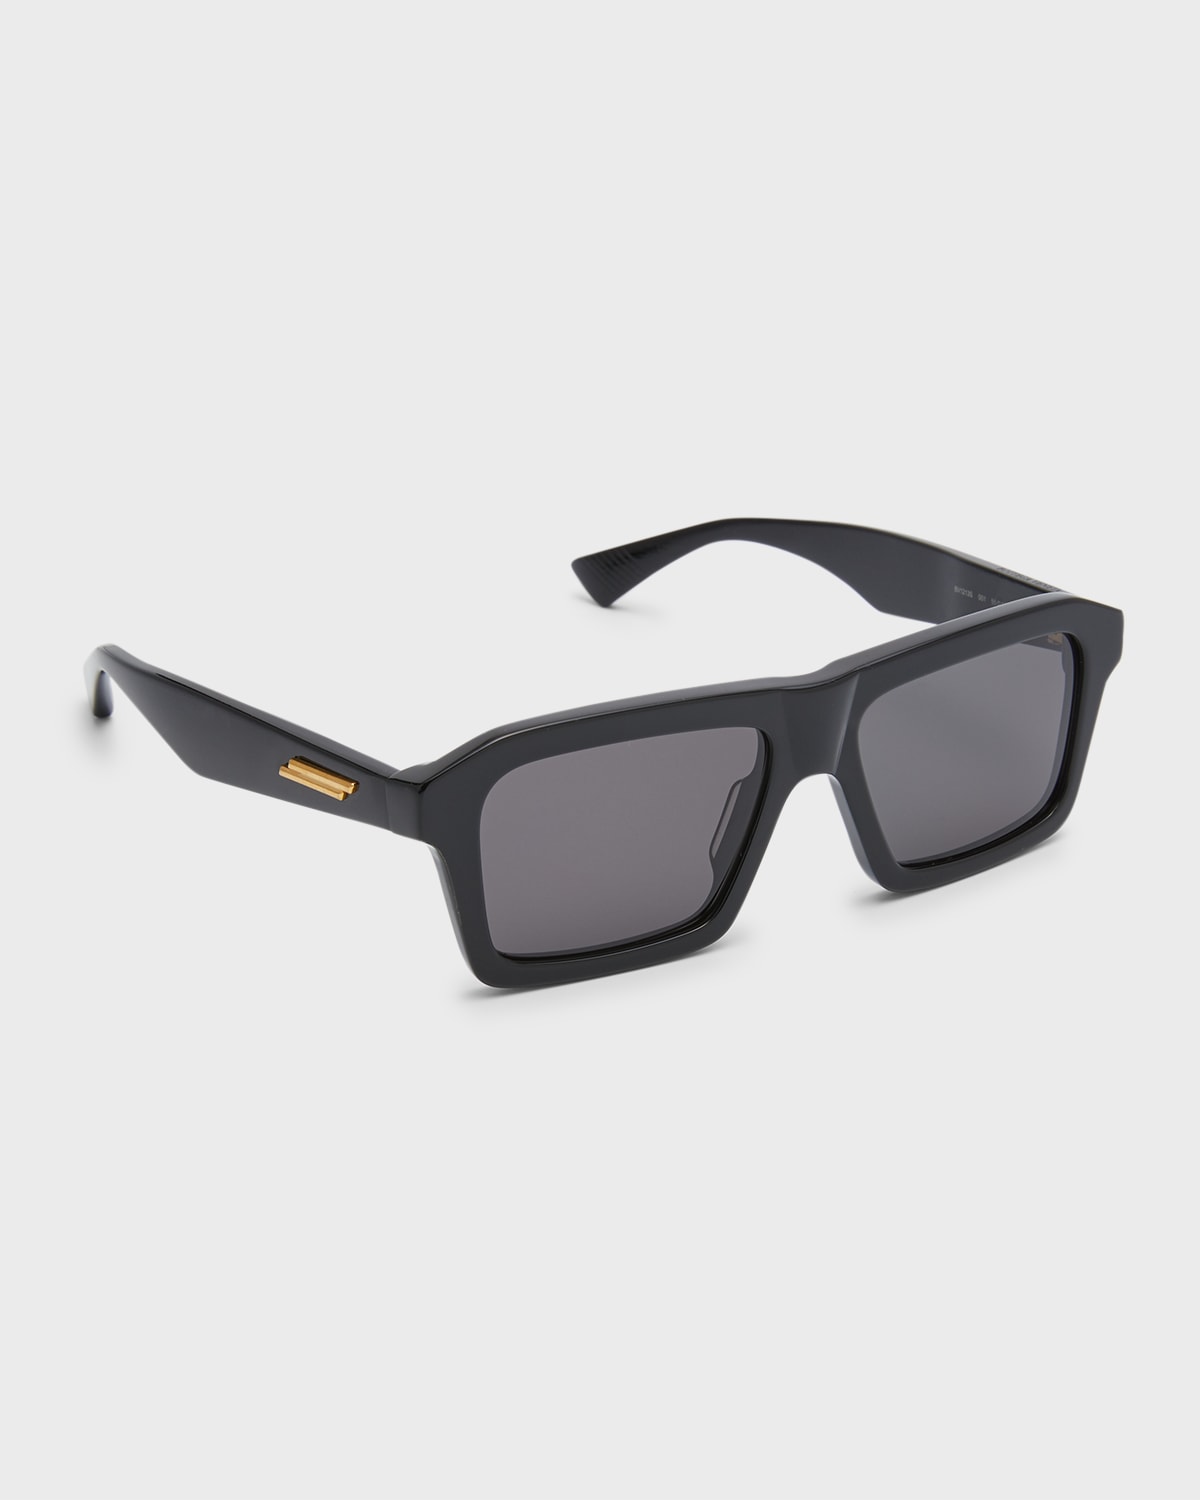 Bottega Veneta Men's Square Acetate Sunglasses In 001 Shiny Solid B